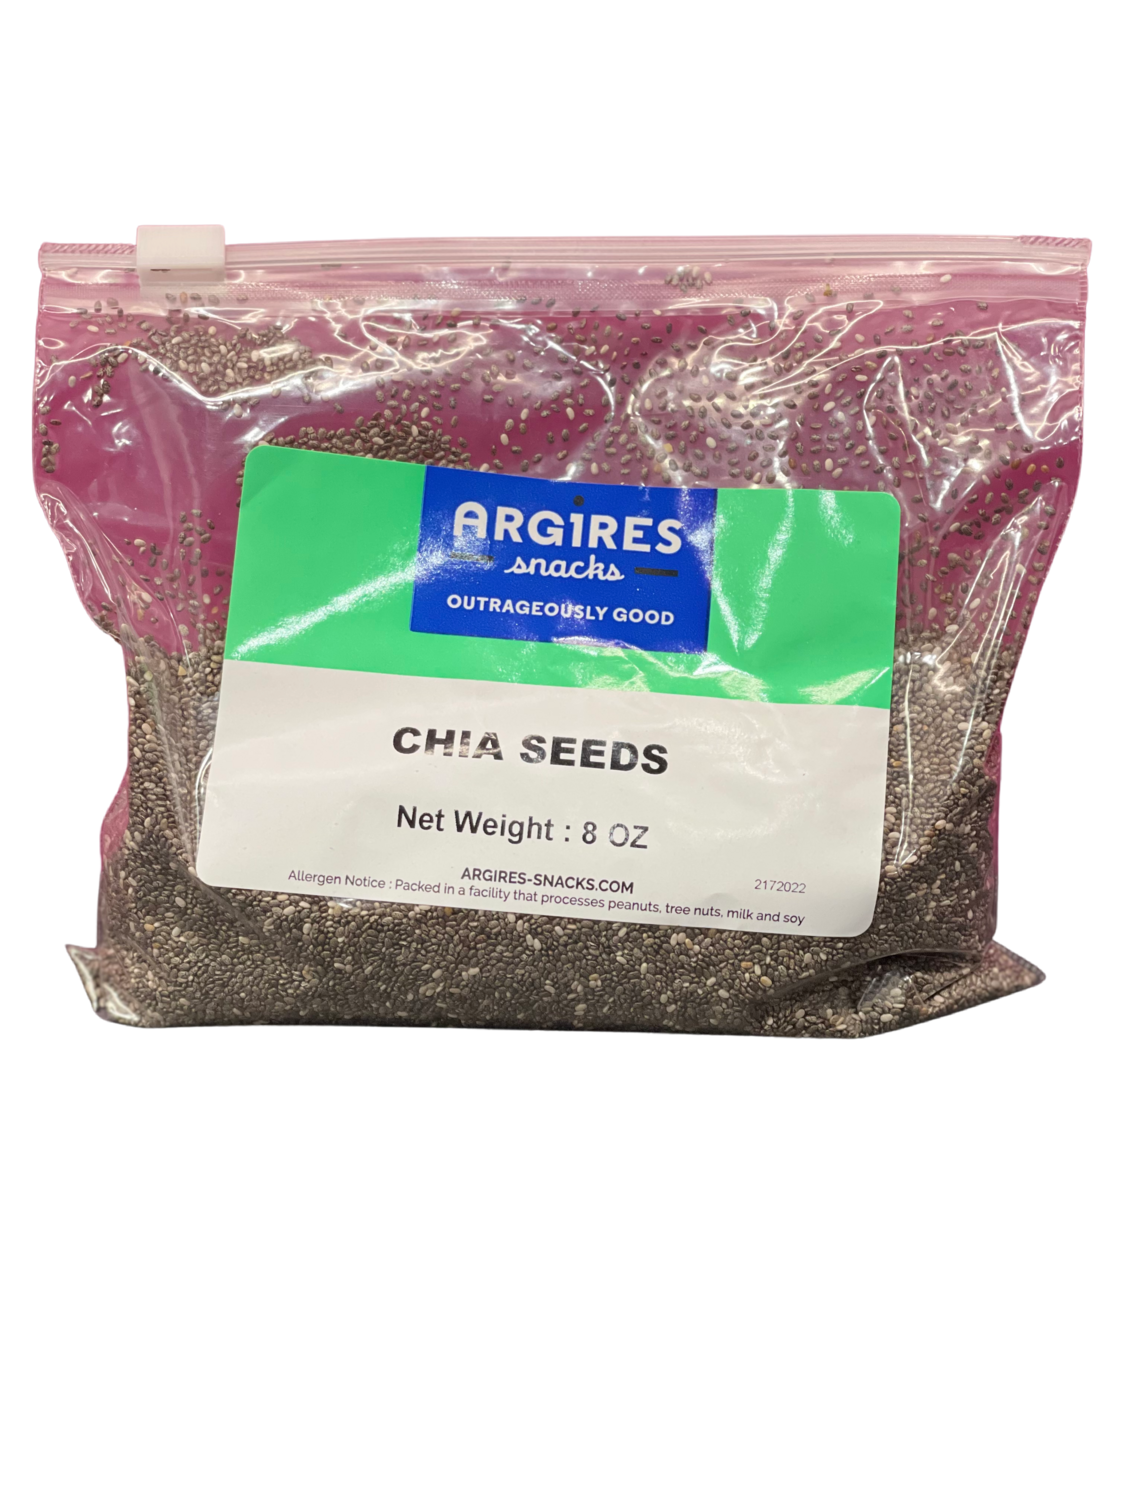 8 oz Chia Seeds from Argires Snacks